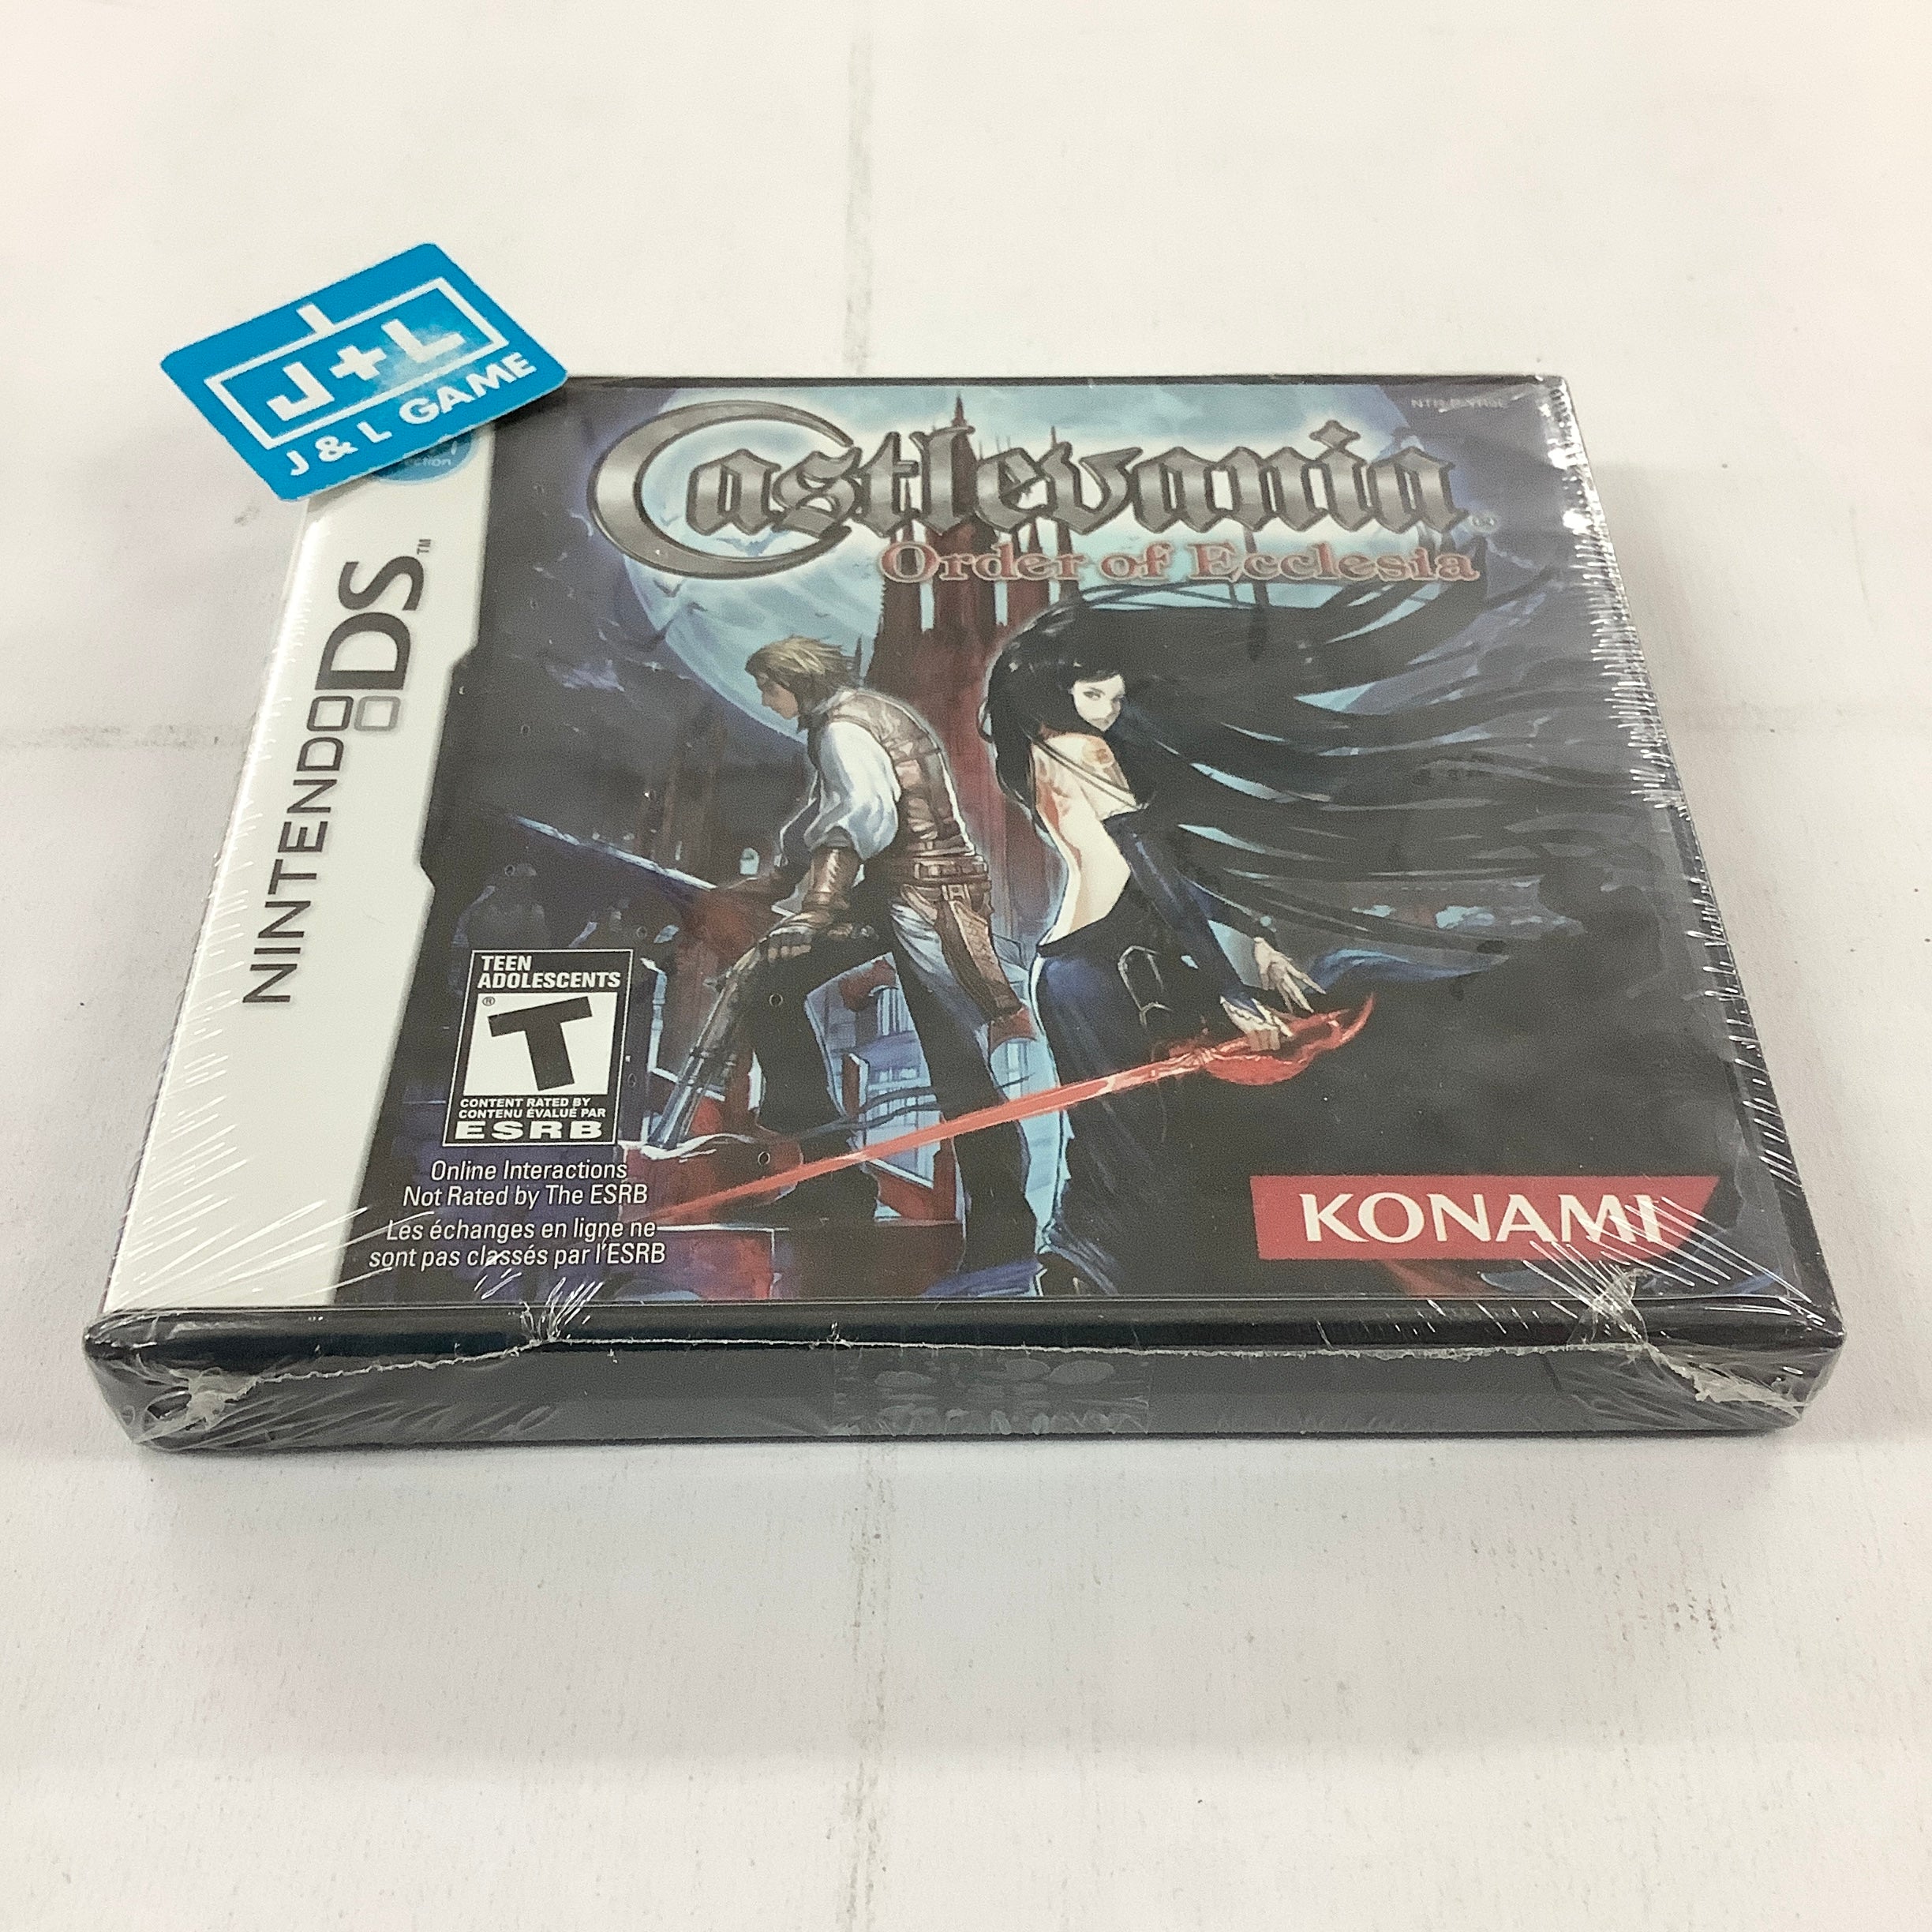 Castlevania: Order of Ecclesia - (NDS) Nintendo DS Video Games Konami   